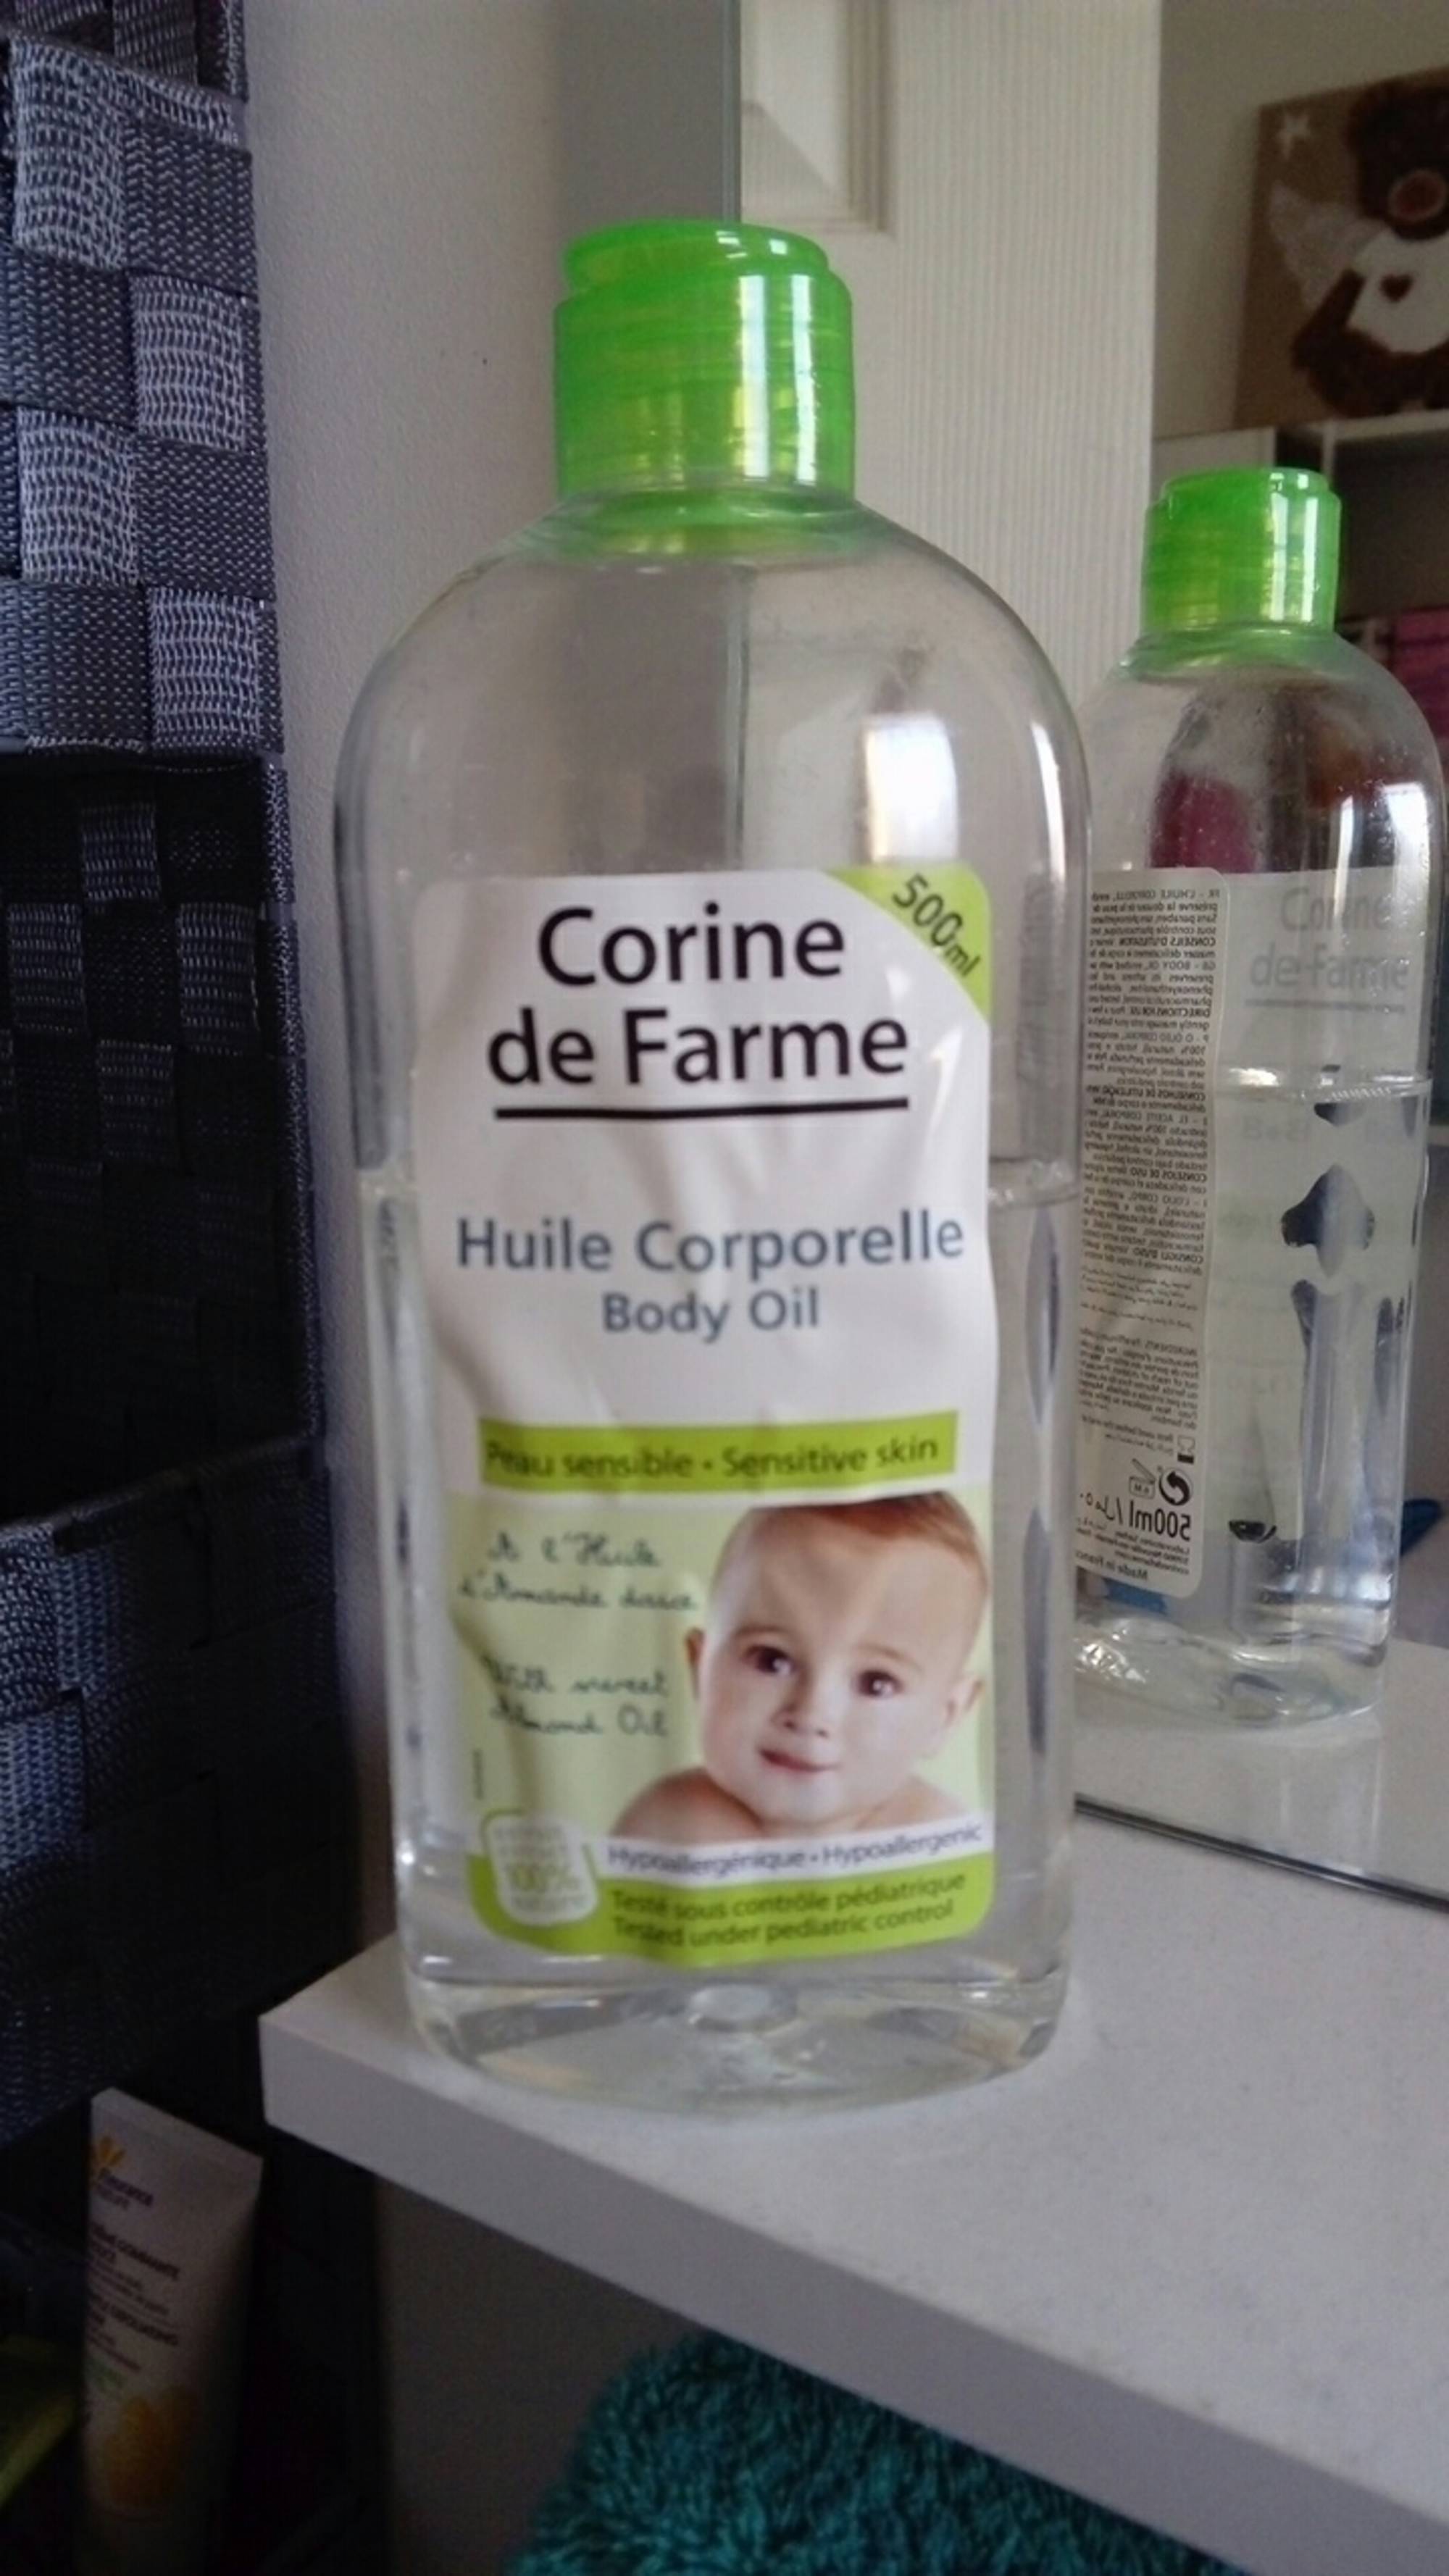 CORINE DE FARME - Huile corporelle body oil